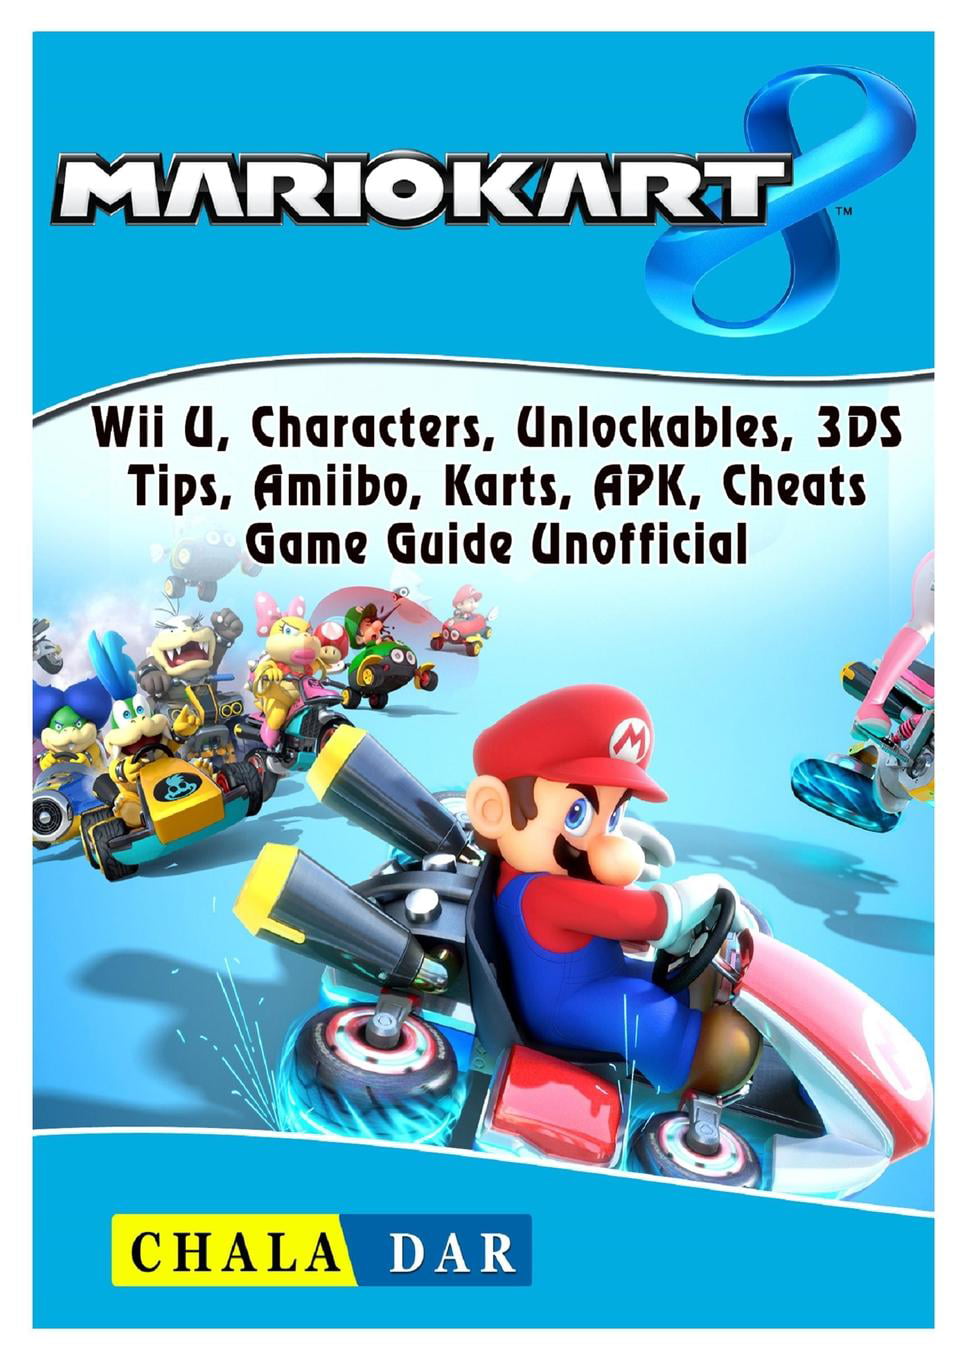 Mario Kart 8 Deluxe Unlockables Guide